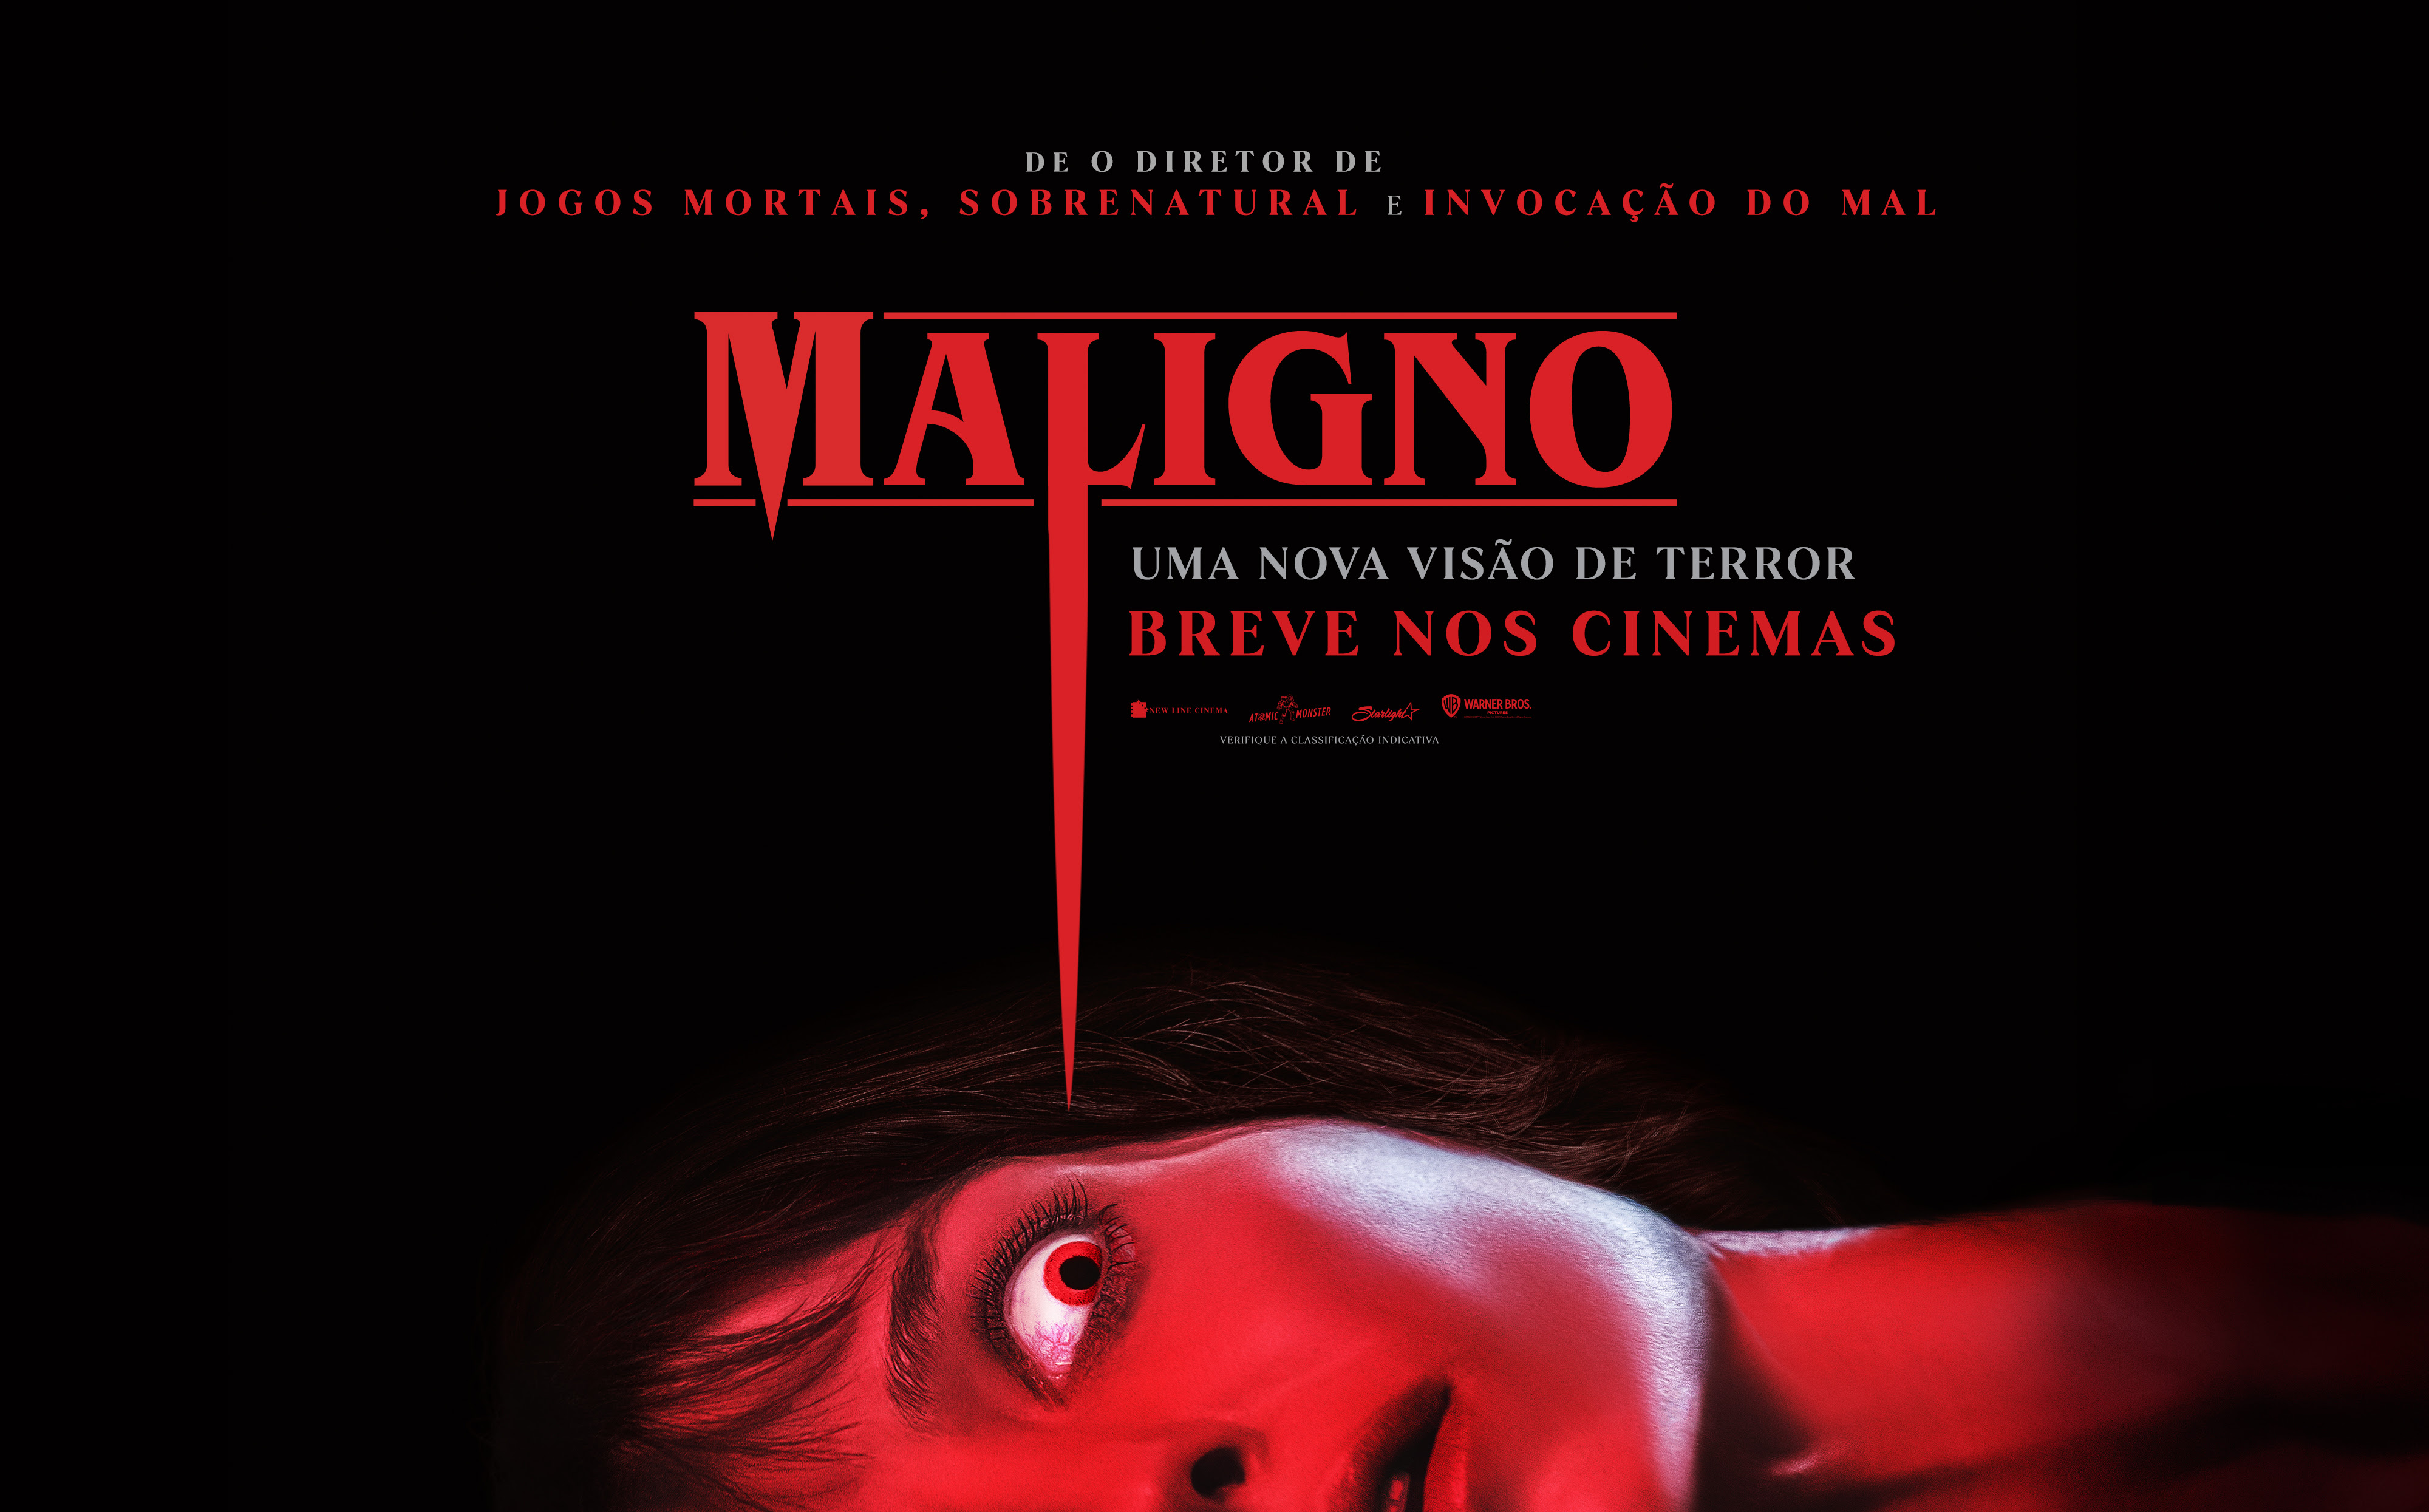 Warner | Divulgado o primeiro trailer de Maligno de James Wan